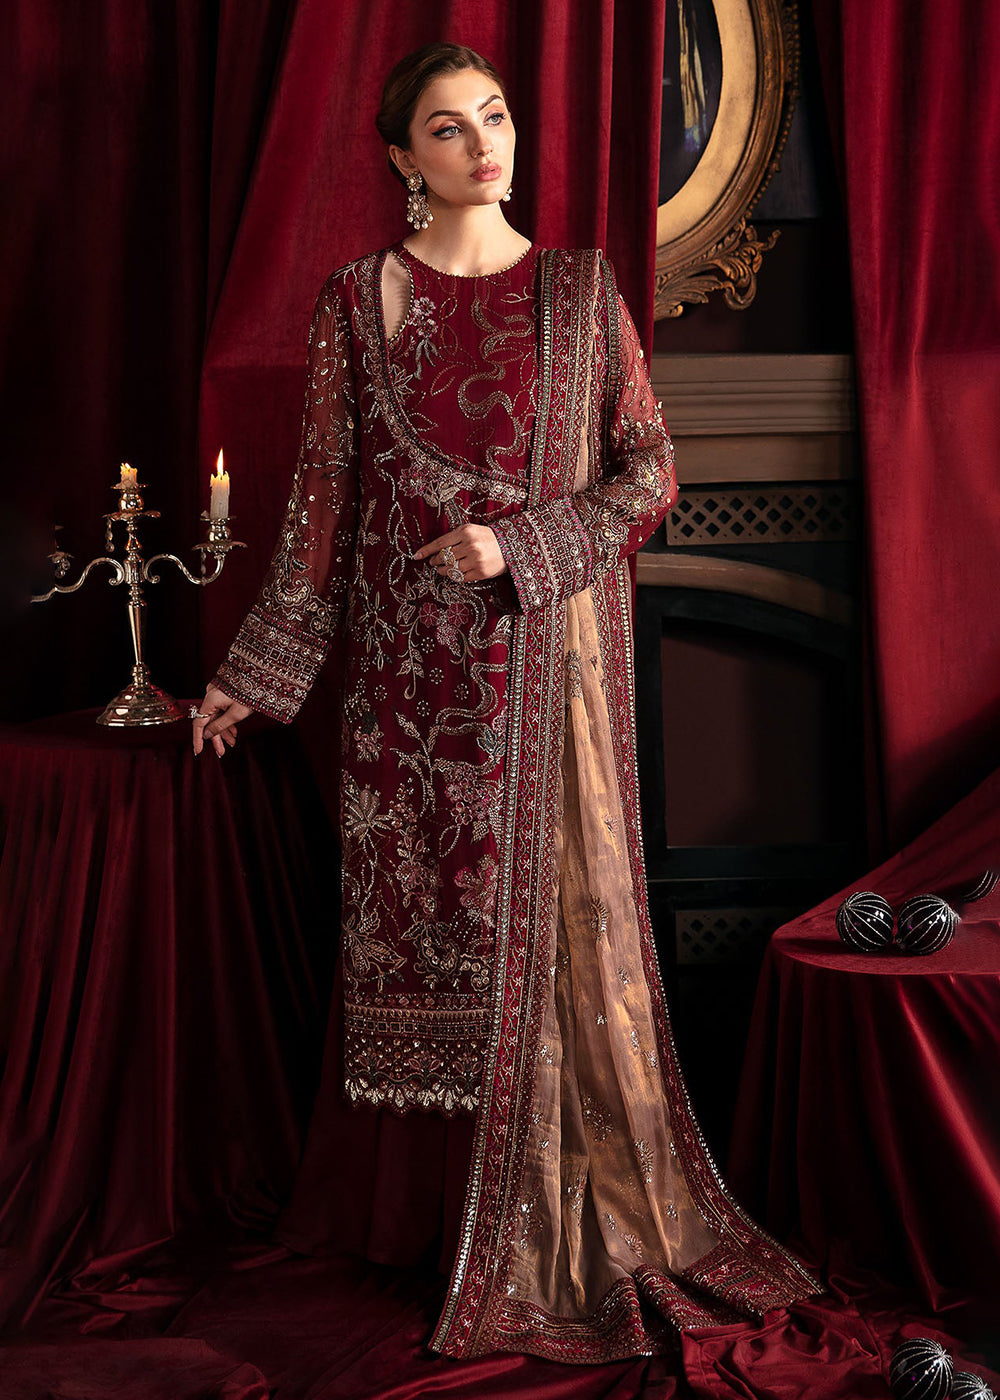 13 Stylish Karwa Chauth Dress Ideas | Karva Chauth Special Dress - Hiscraves